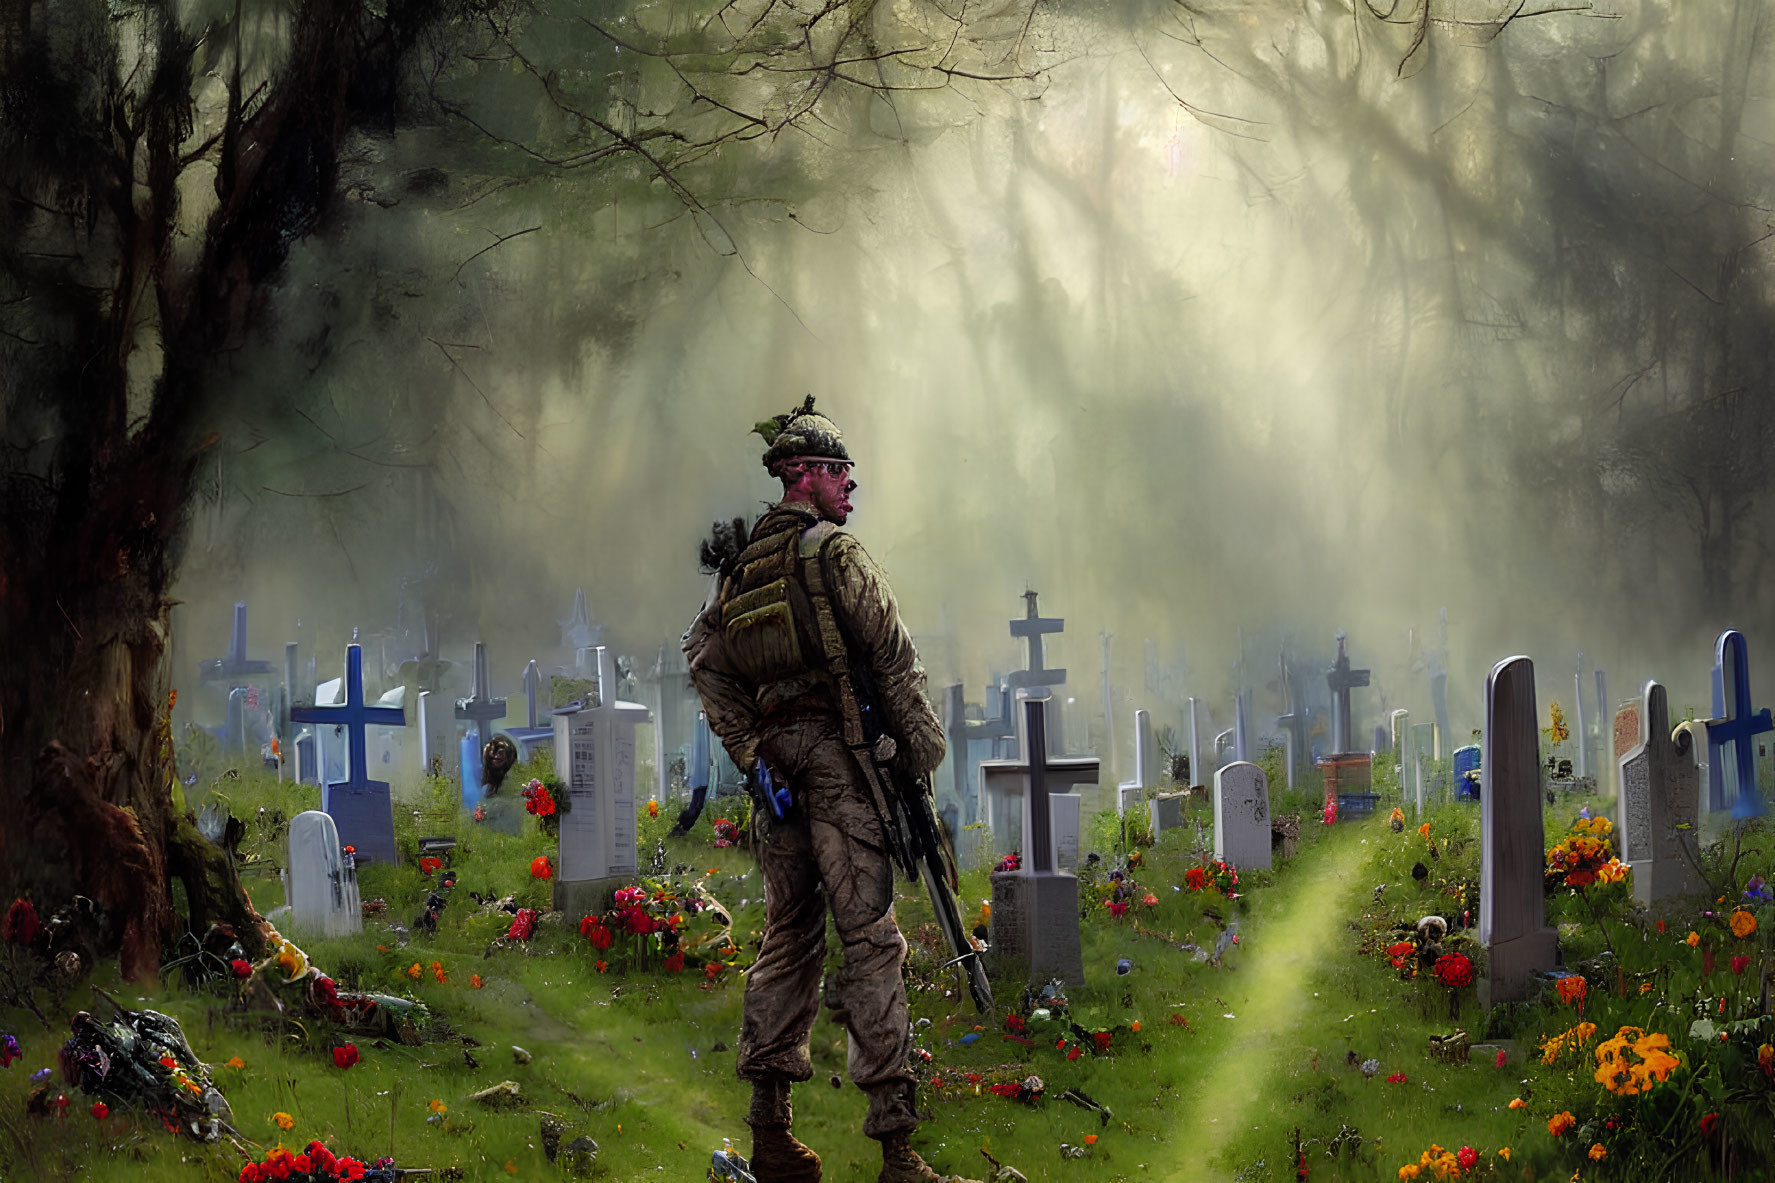 Soldier walking in misty cemetery with gravestones under sunlight